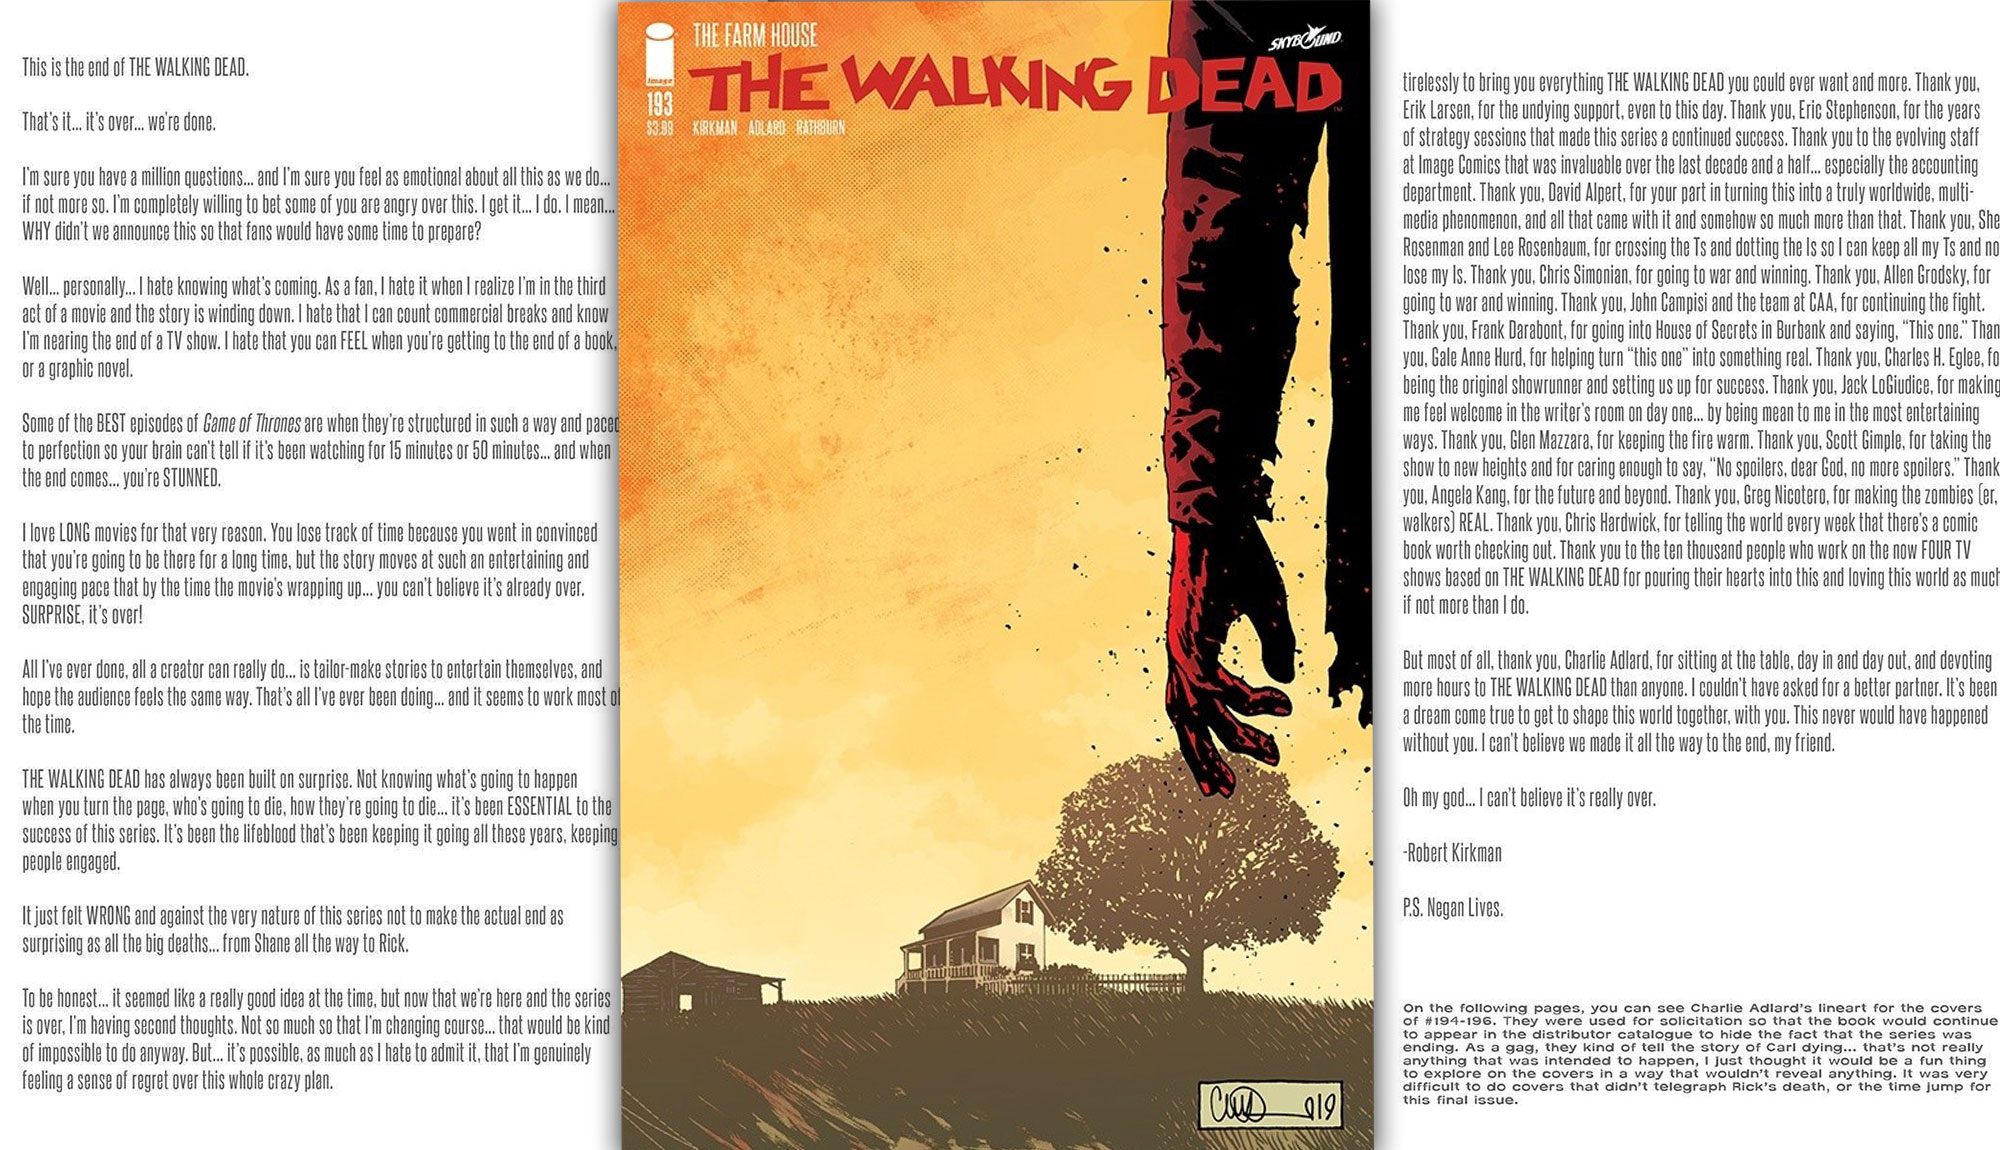 Read Robert Kirkman’s Letter To Fans From The Walking Dead Issue #193